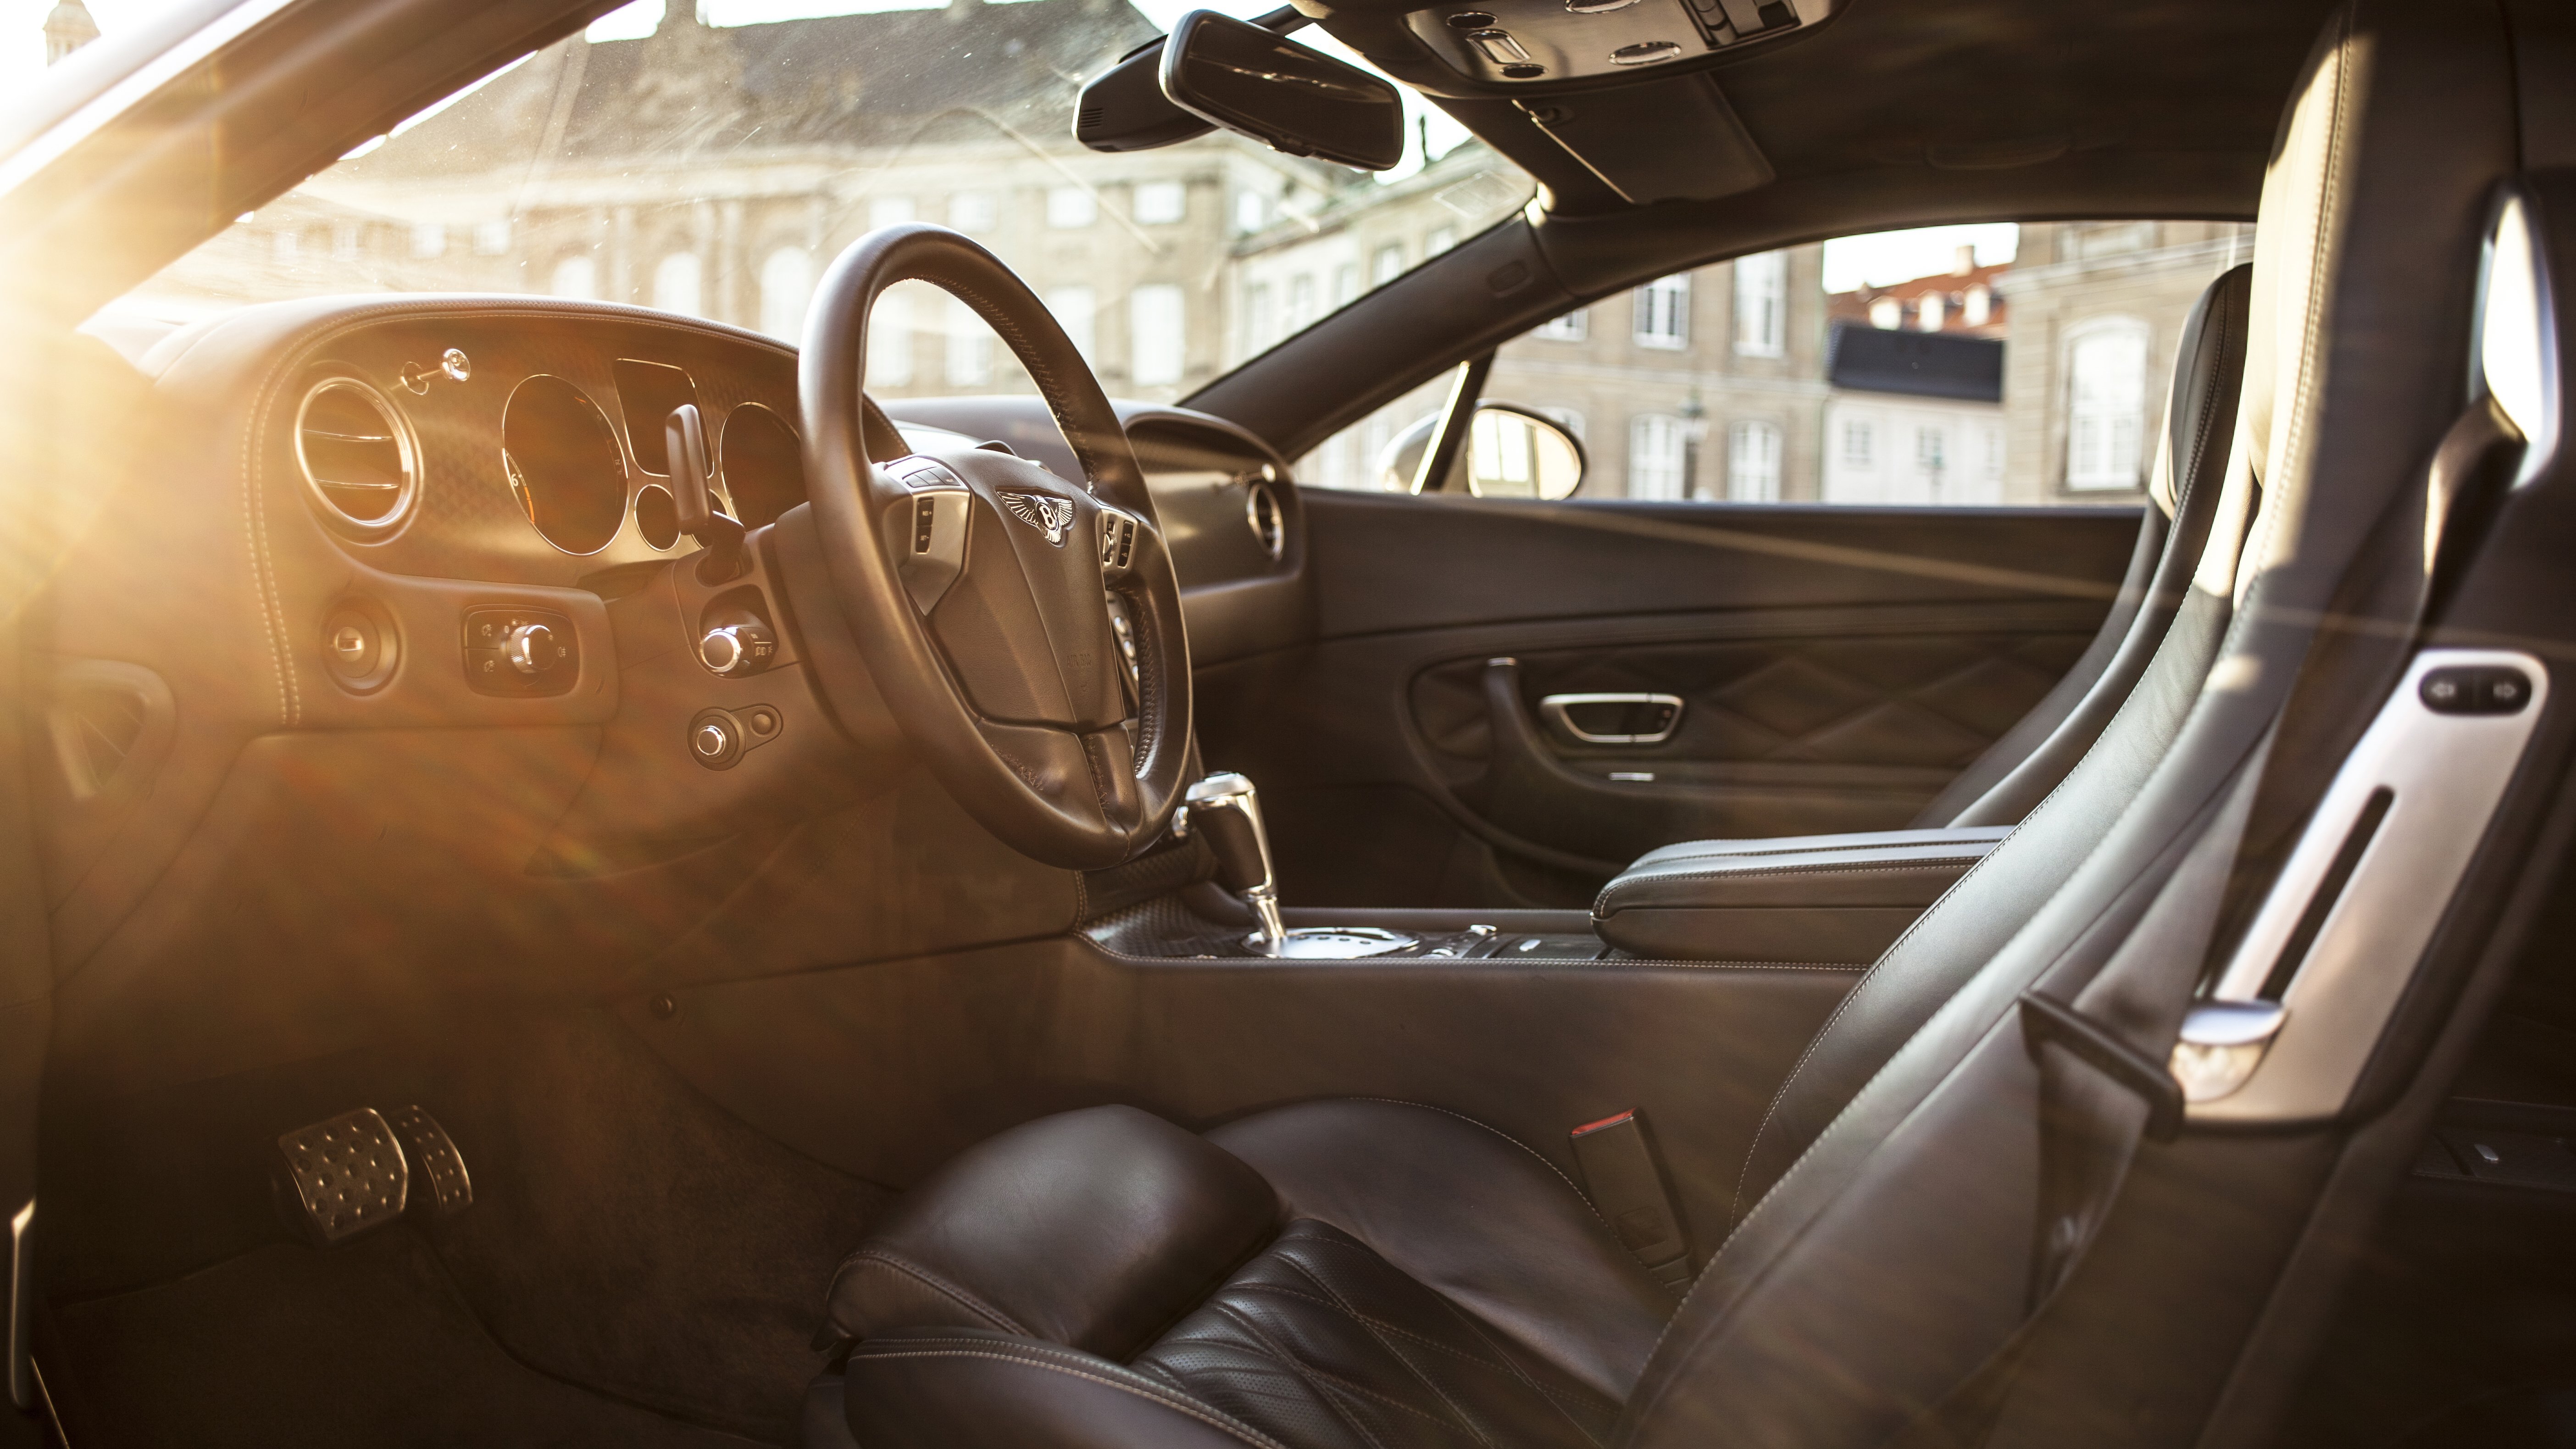 Sunny, Bentley Continental GT, Bentley, Interior, Warm, Leather, Sun rays Wallpaper